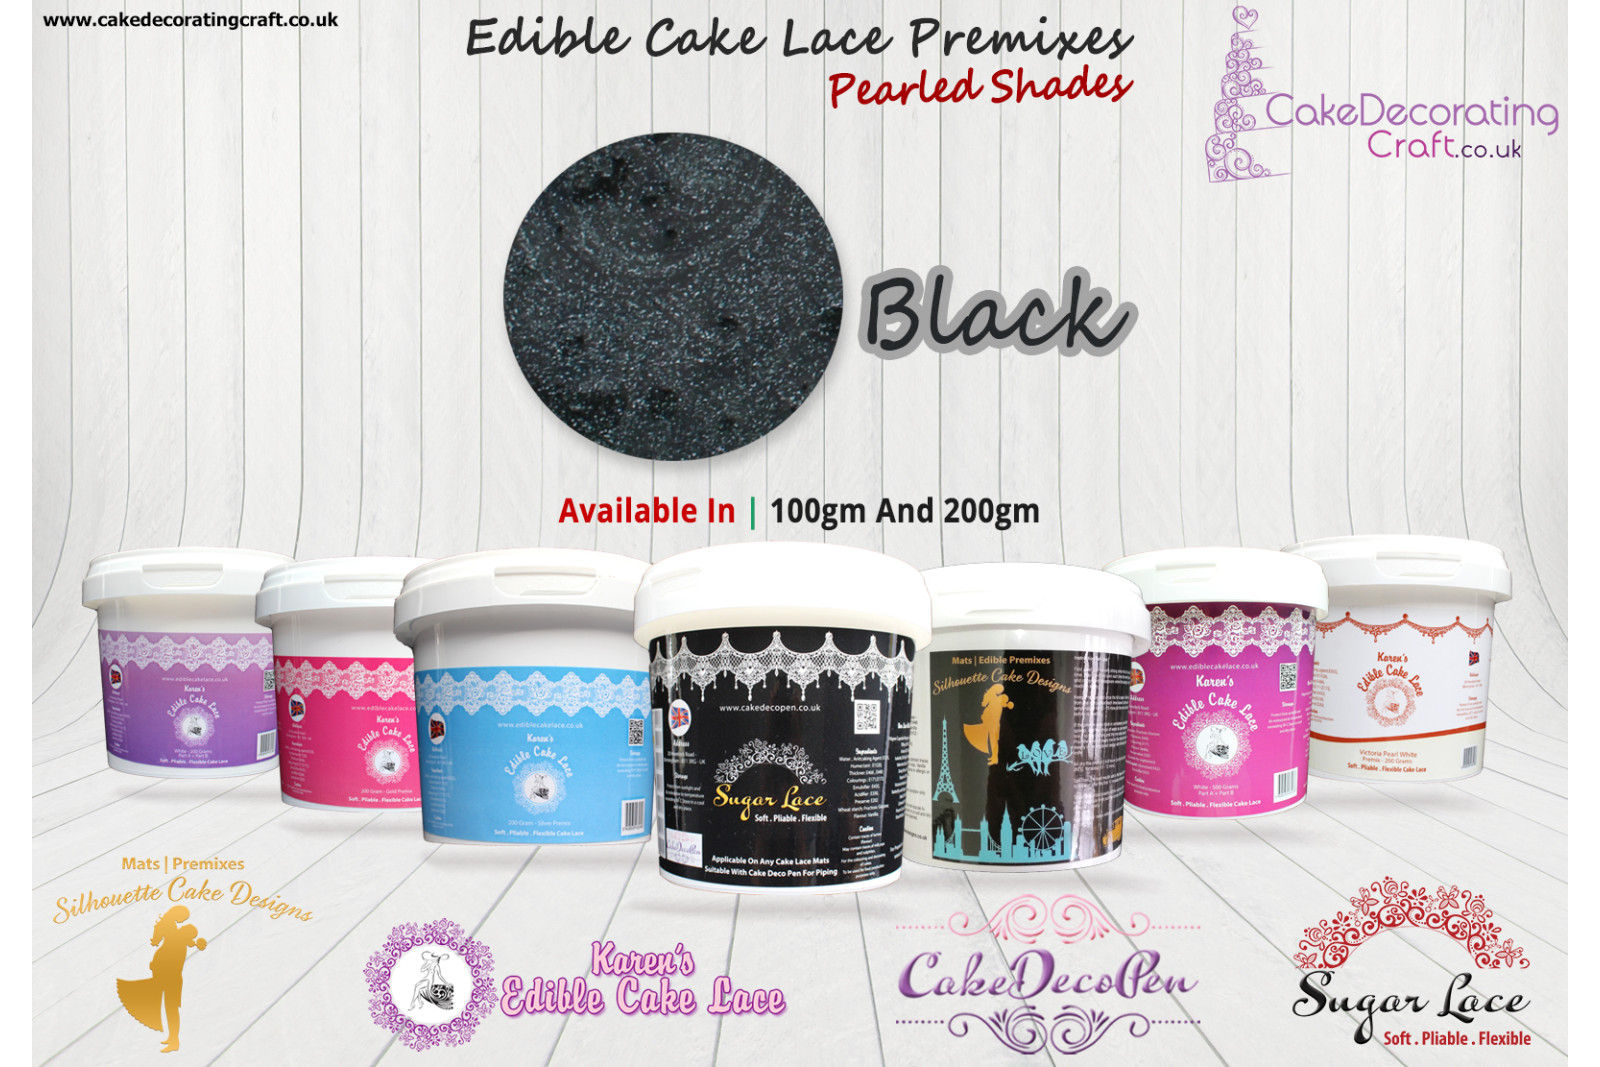 Black Colour | Silhouette Cake Design Premixes | Cake Lace | Pearled Shade | 200 Grams